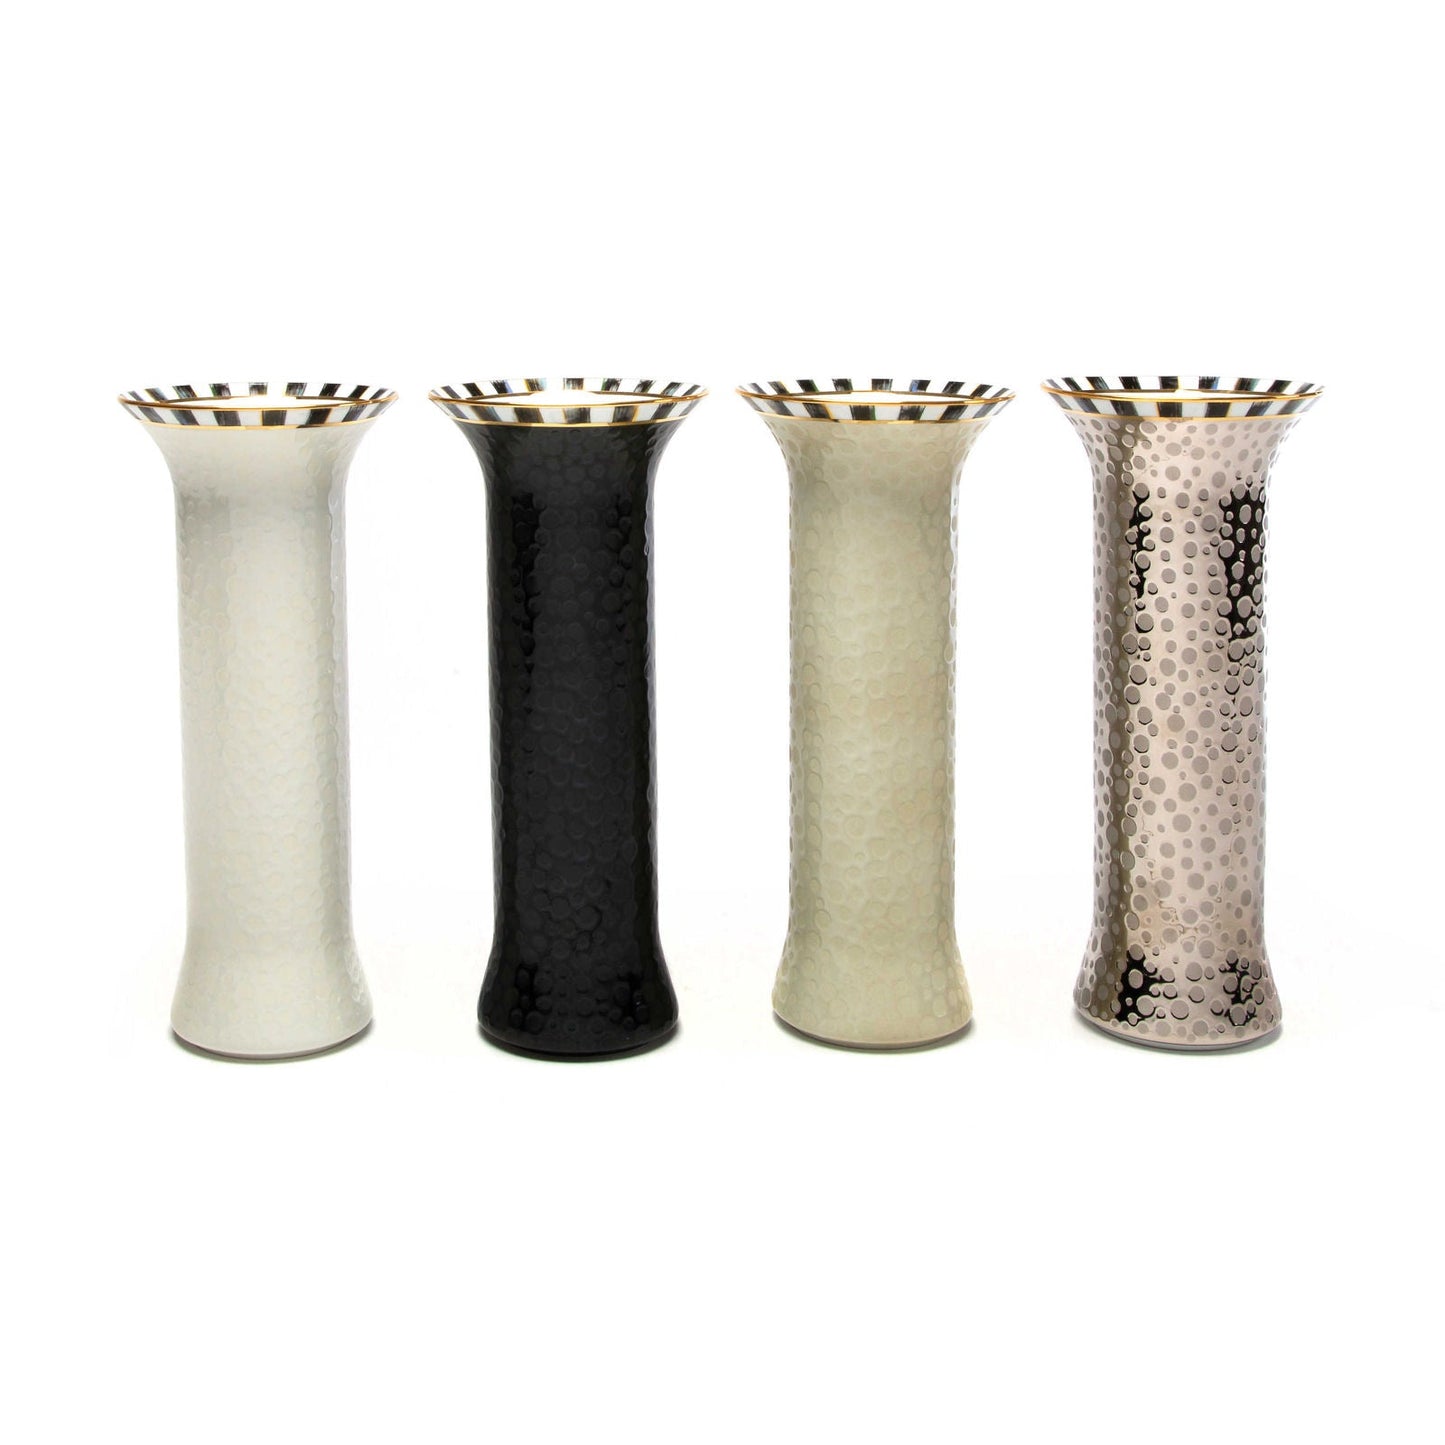 Luxury SoHo Vase - Platinum - |VESIMI Design| Luxury and Rustic bathrooms online